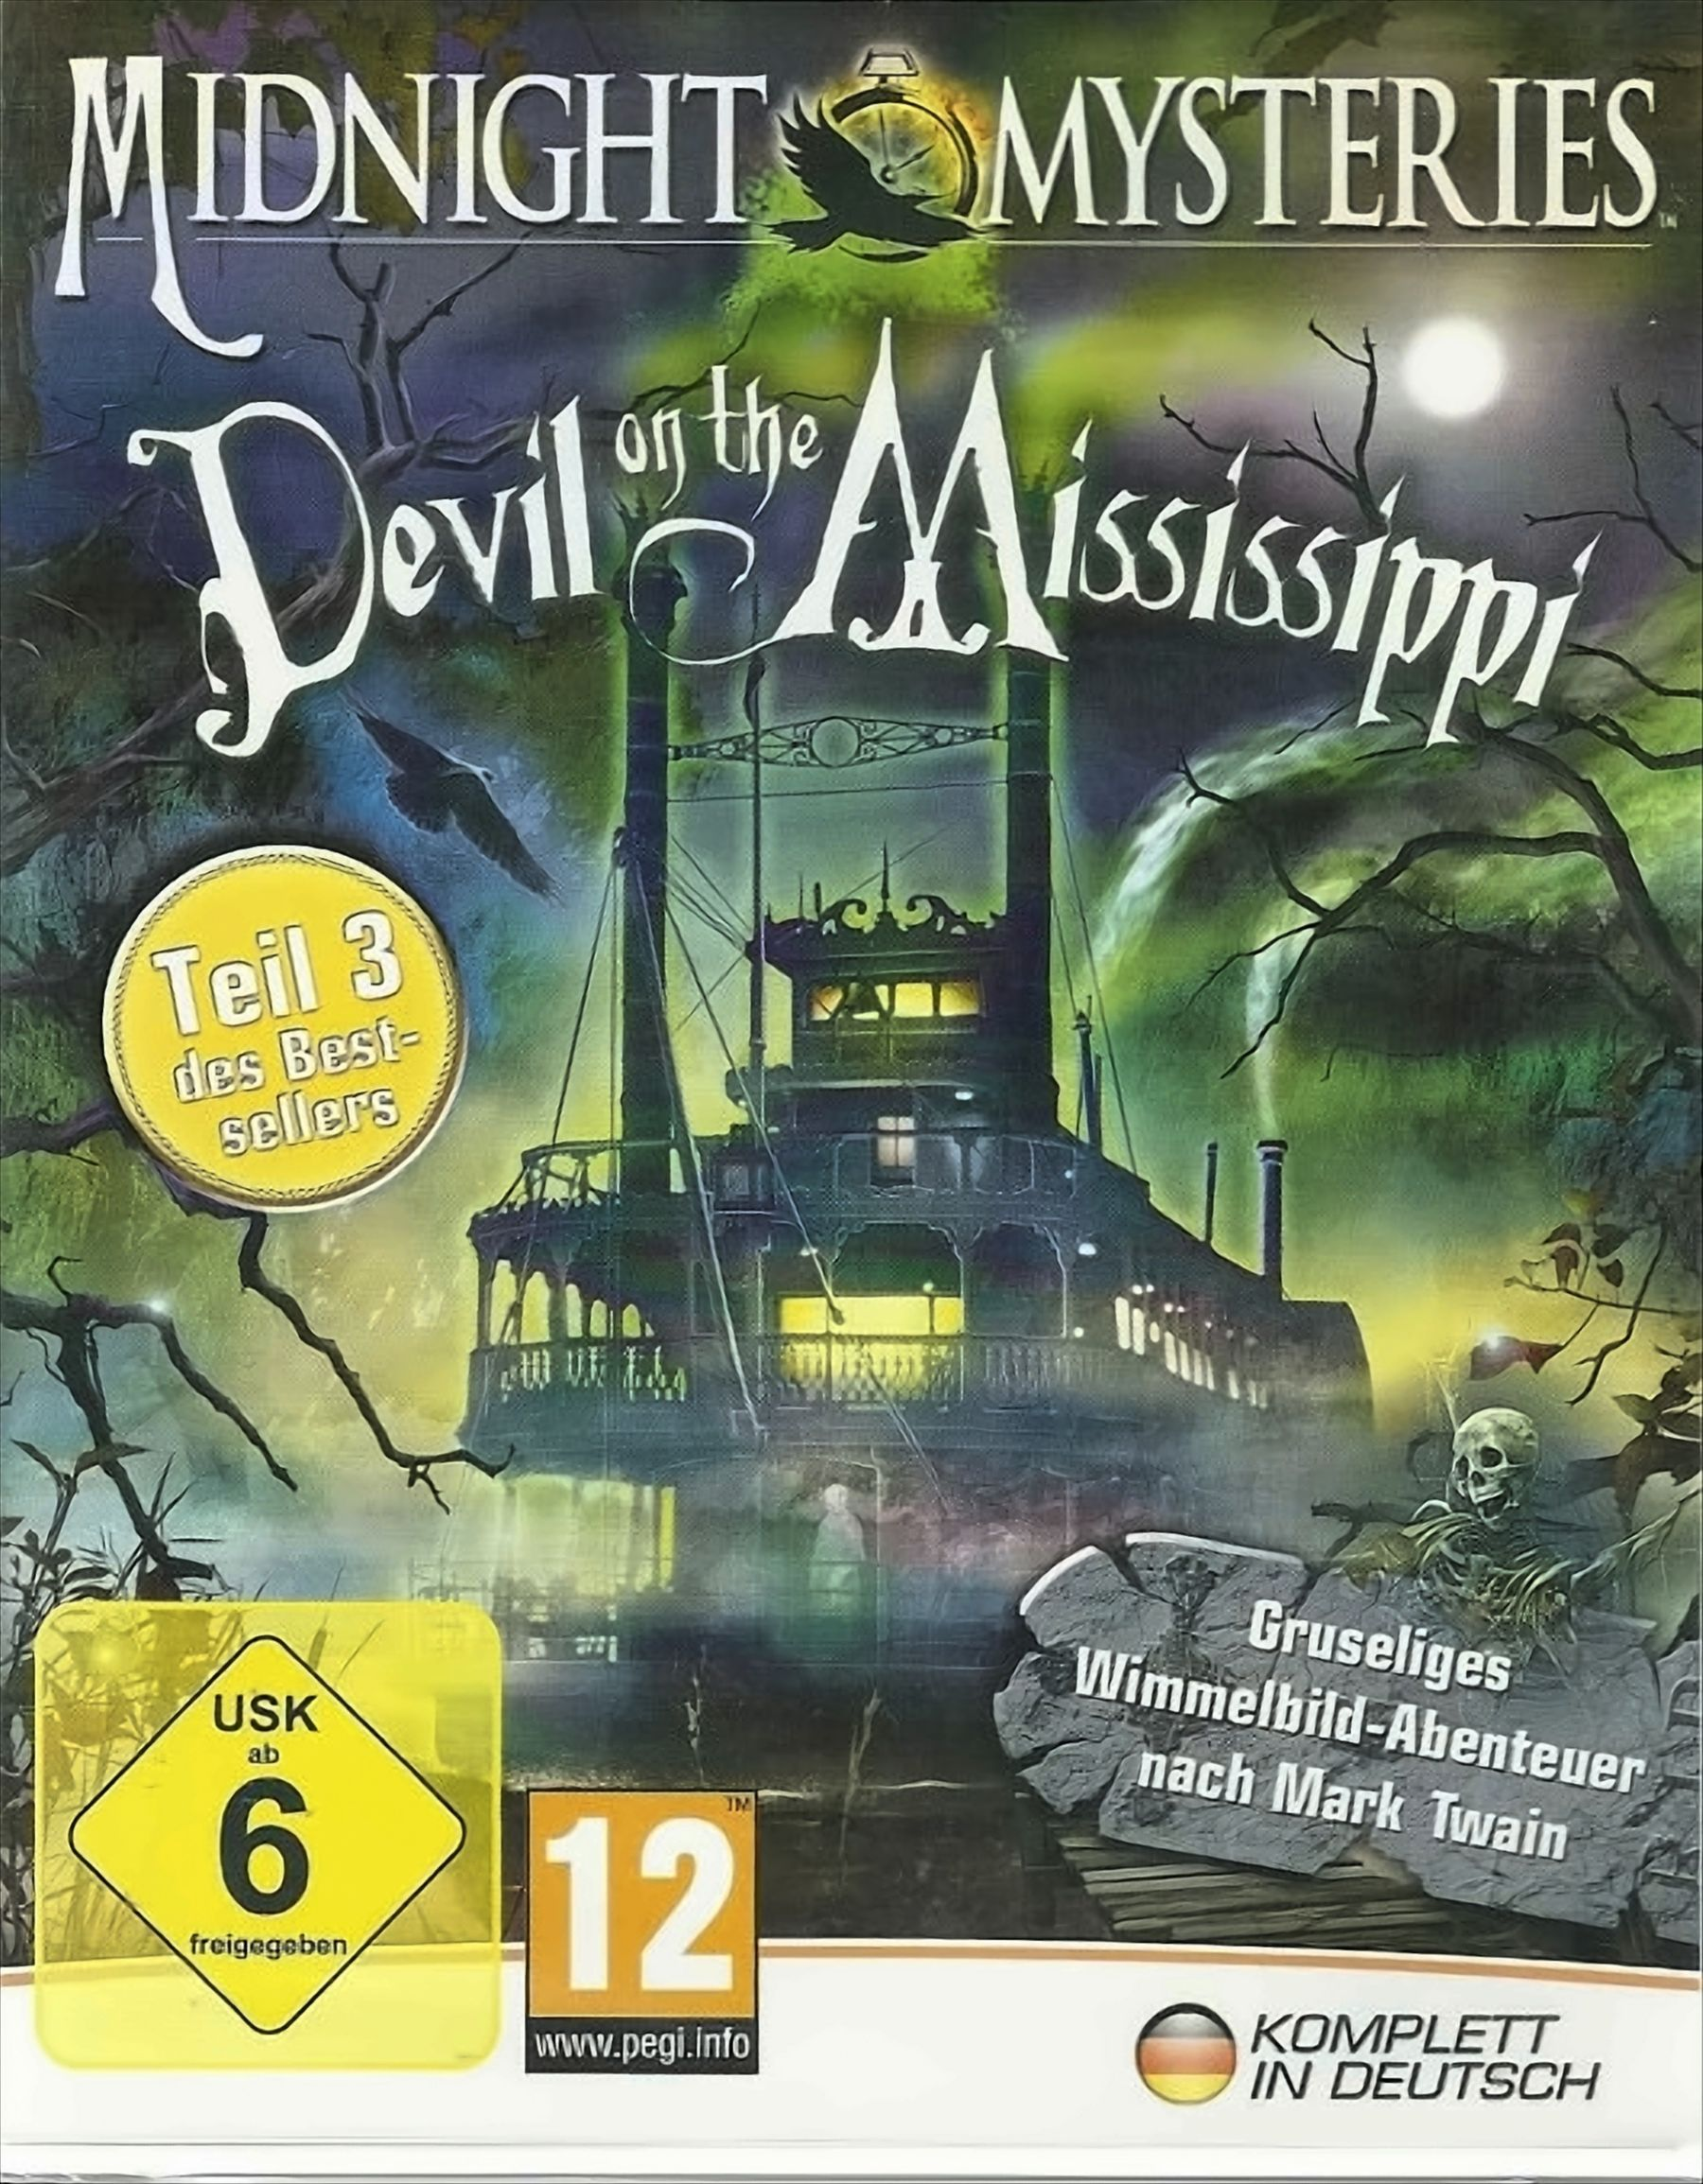 Midnight Mysteries: Devil On - Mississippi The [PC